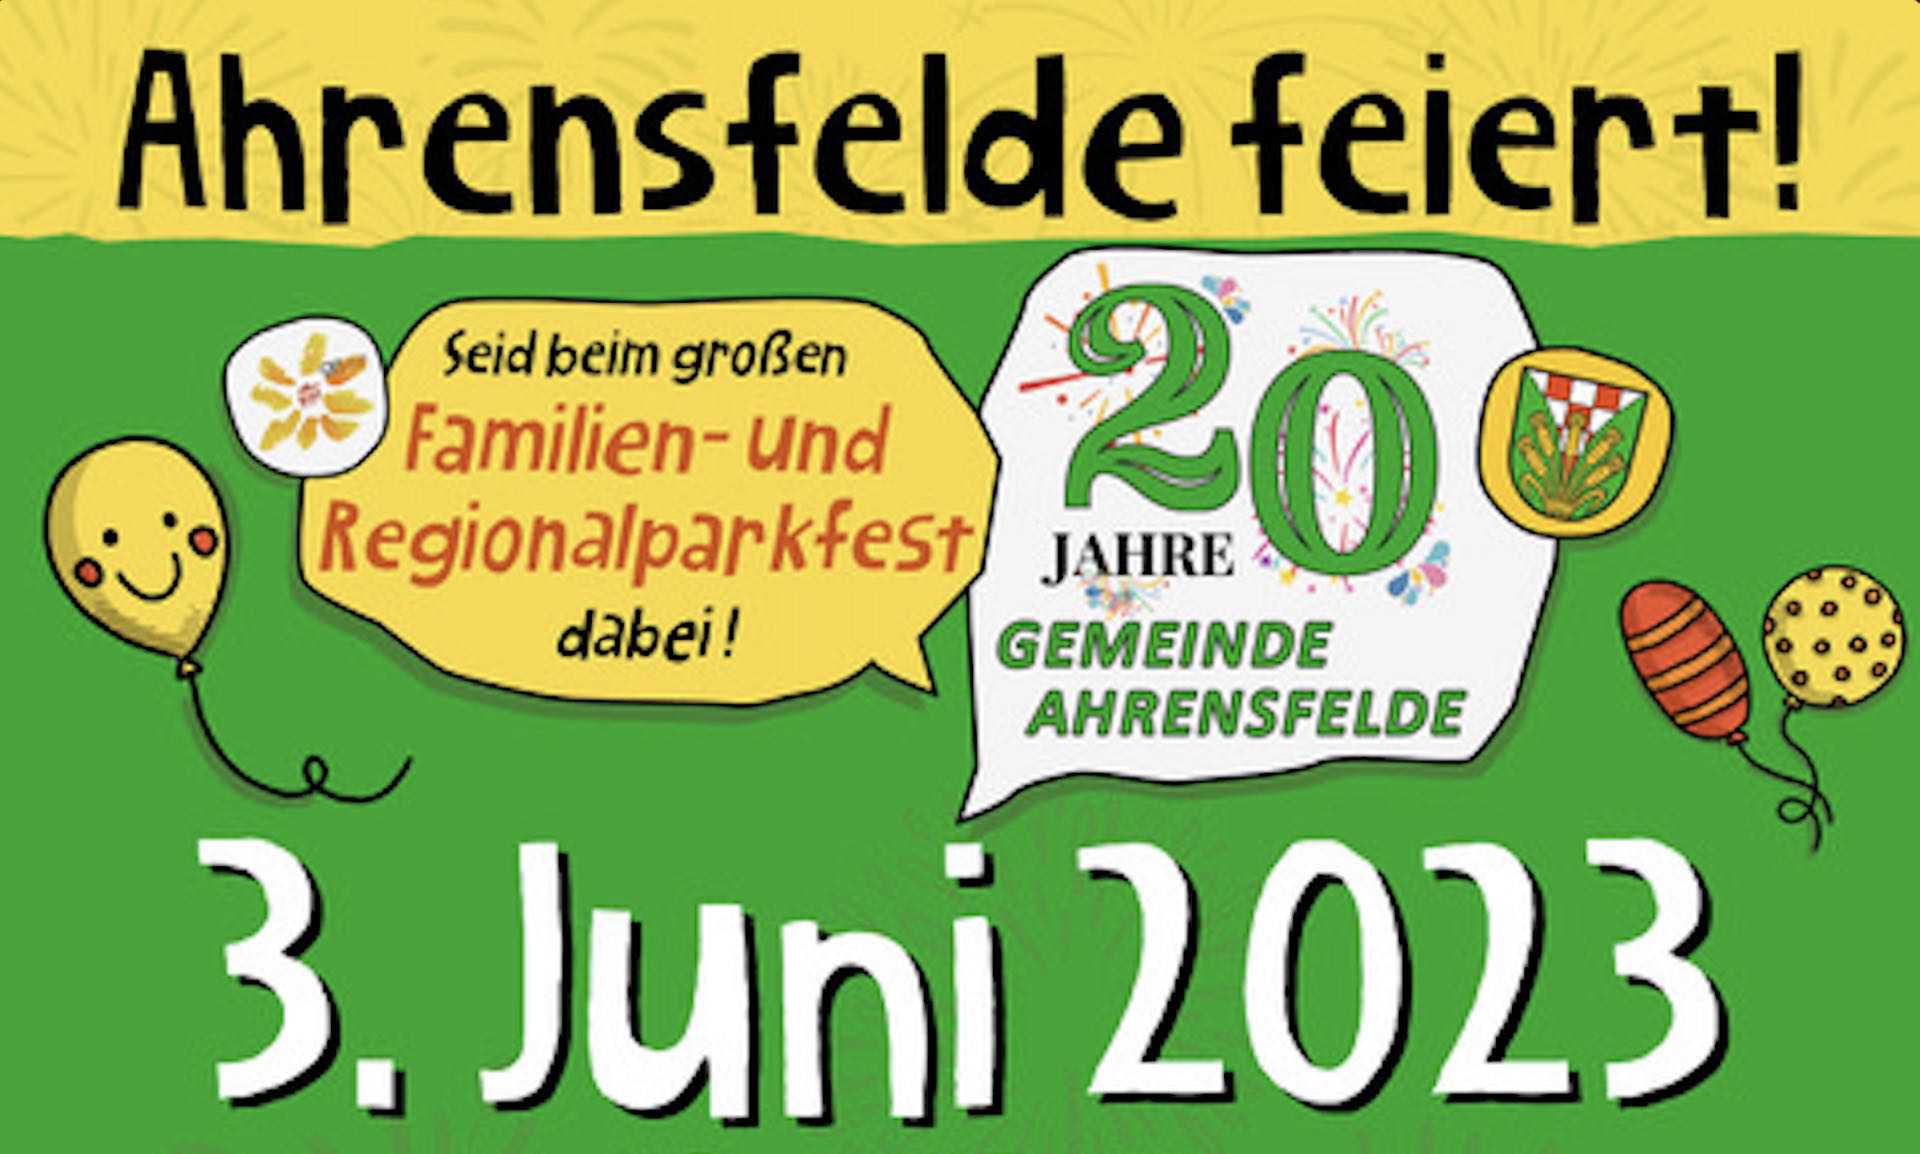 Ahrensfelde feiert Regionalparkfest 20 Jahre Ahrensfelde